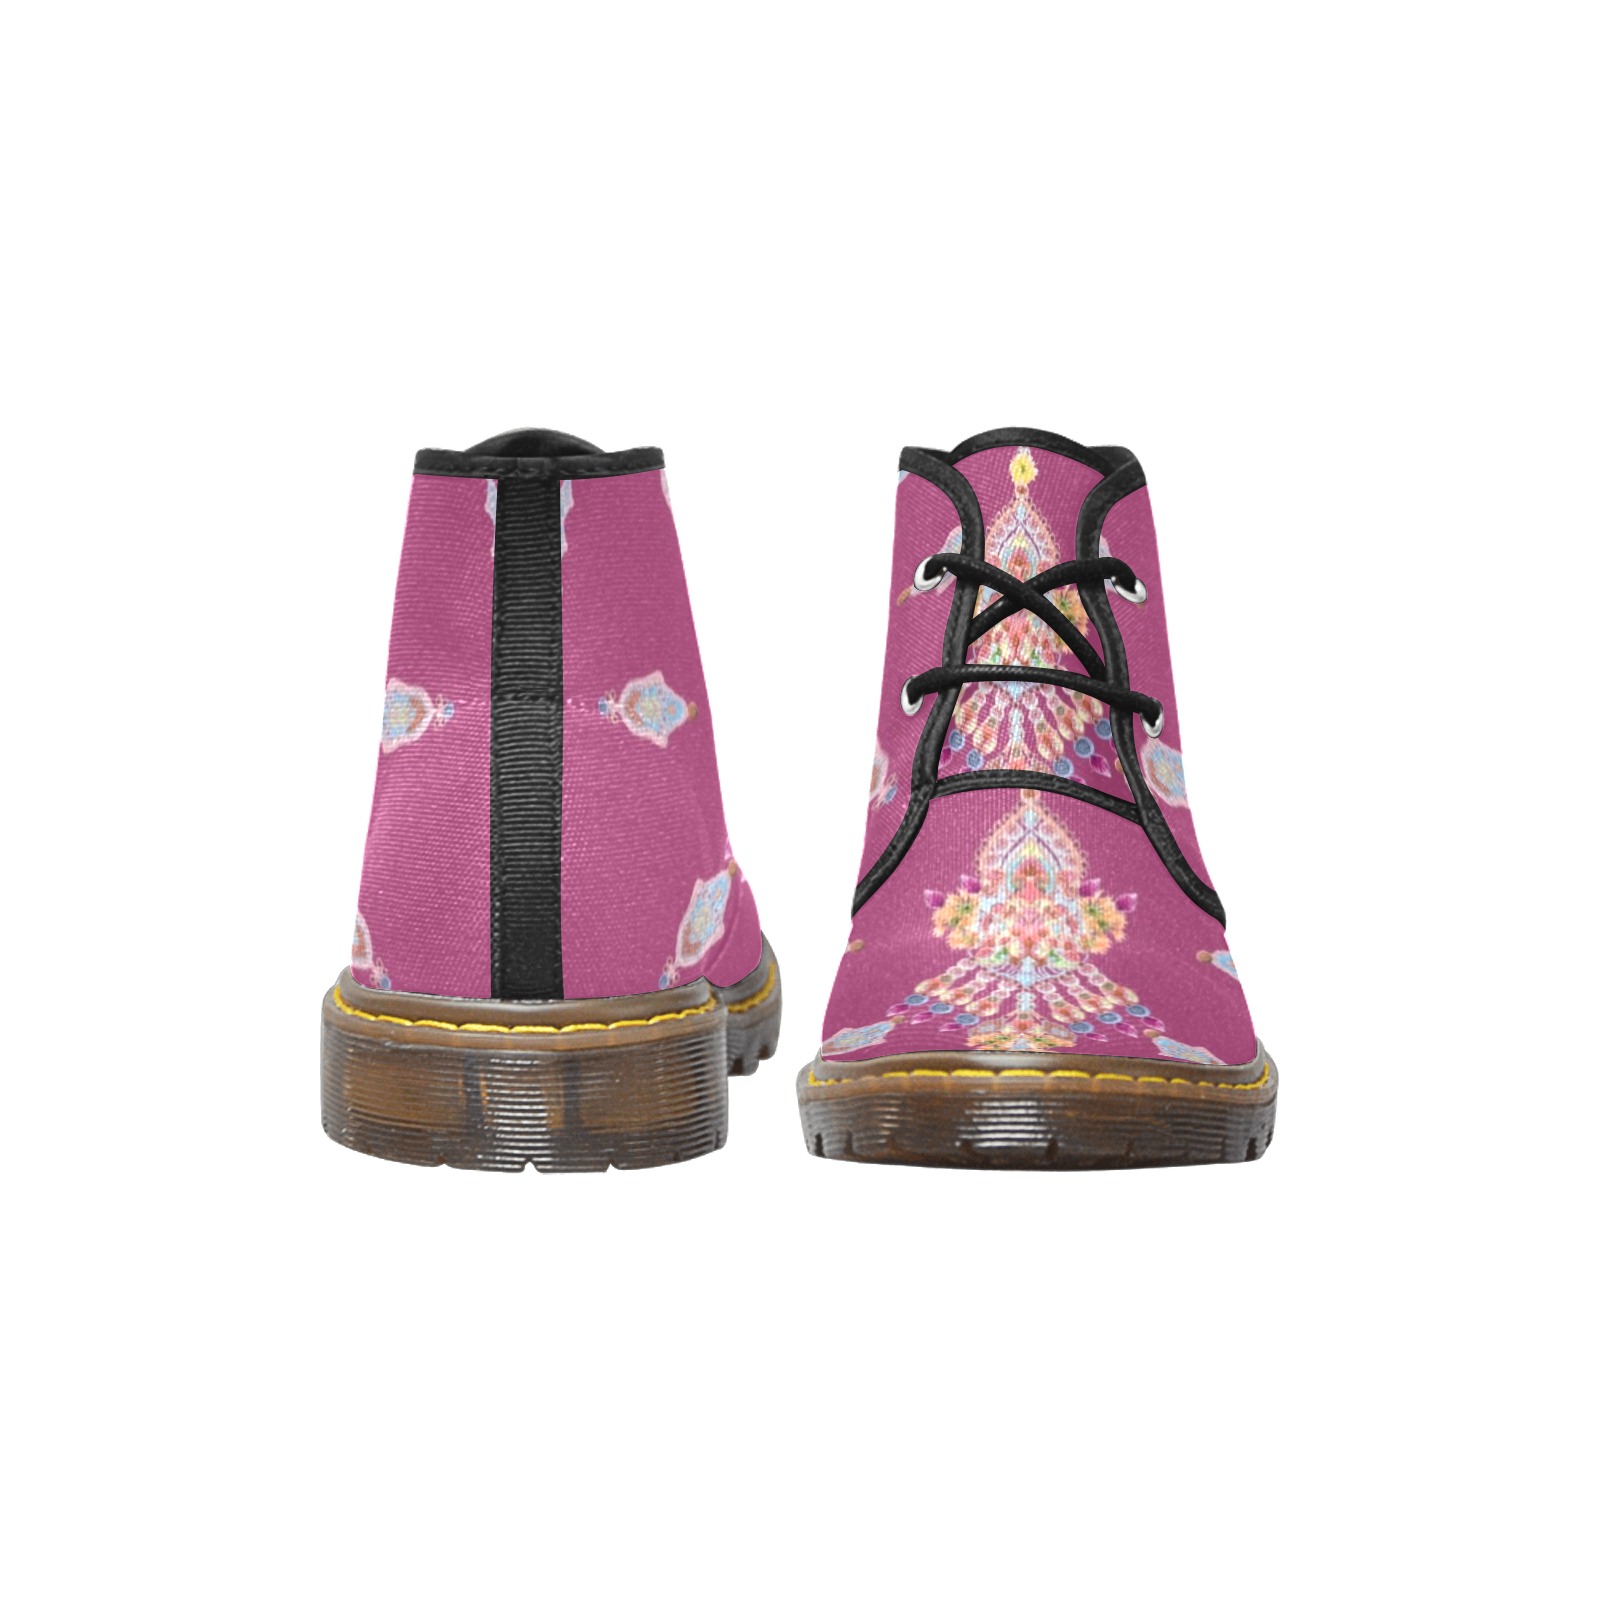 BLEUETS 7 Women's Canvas Chukka Boots (Model 2402-1)